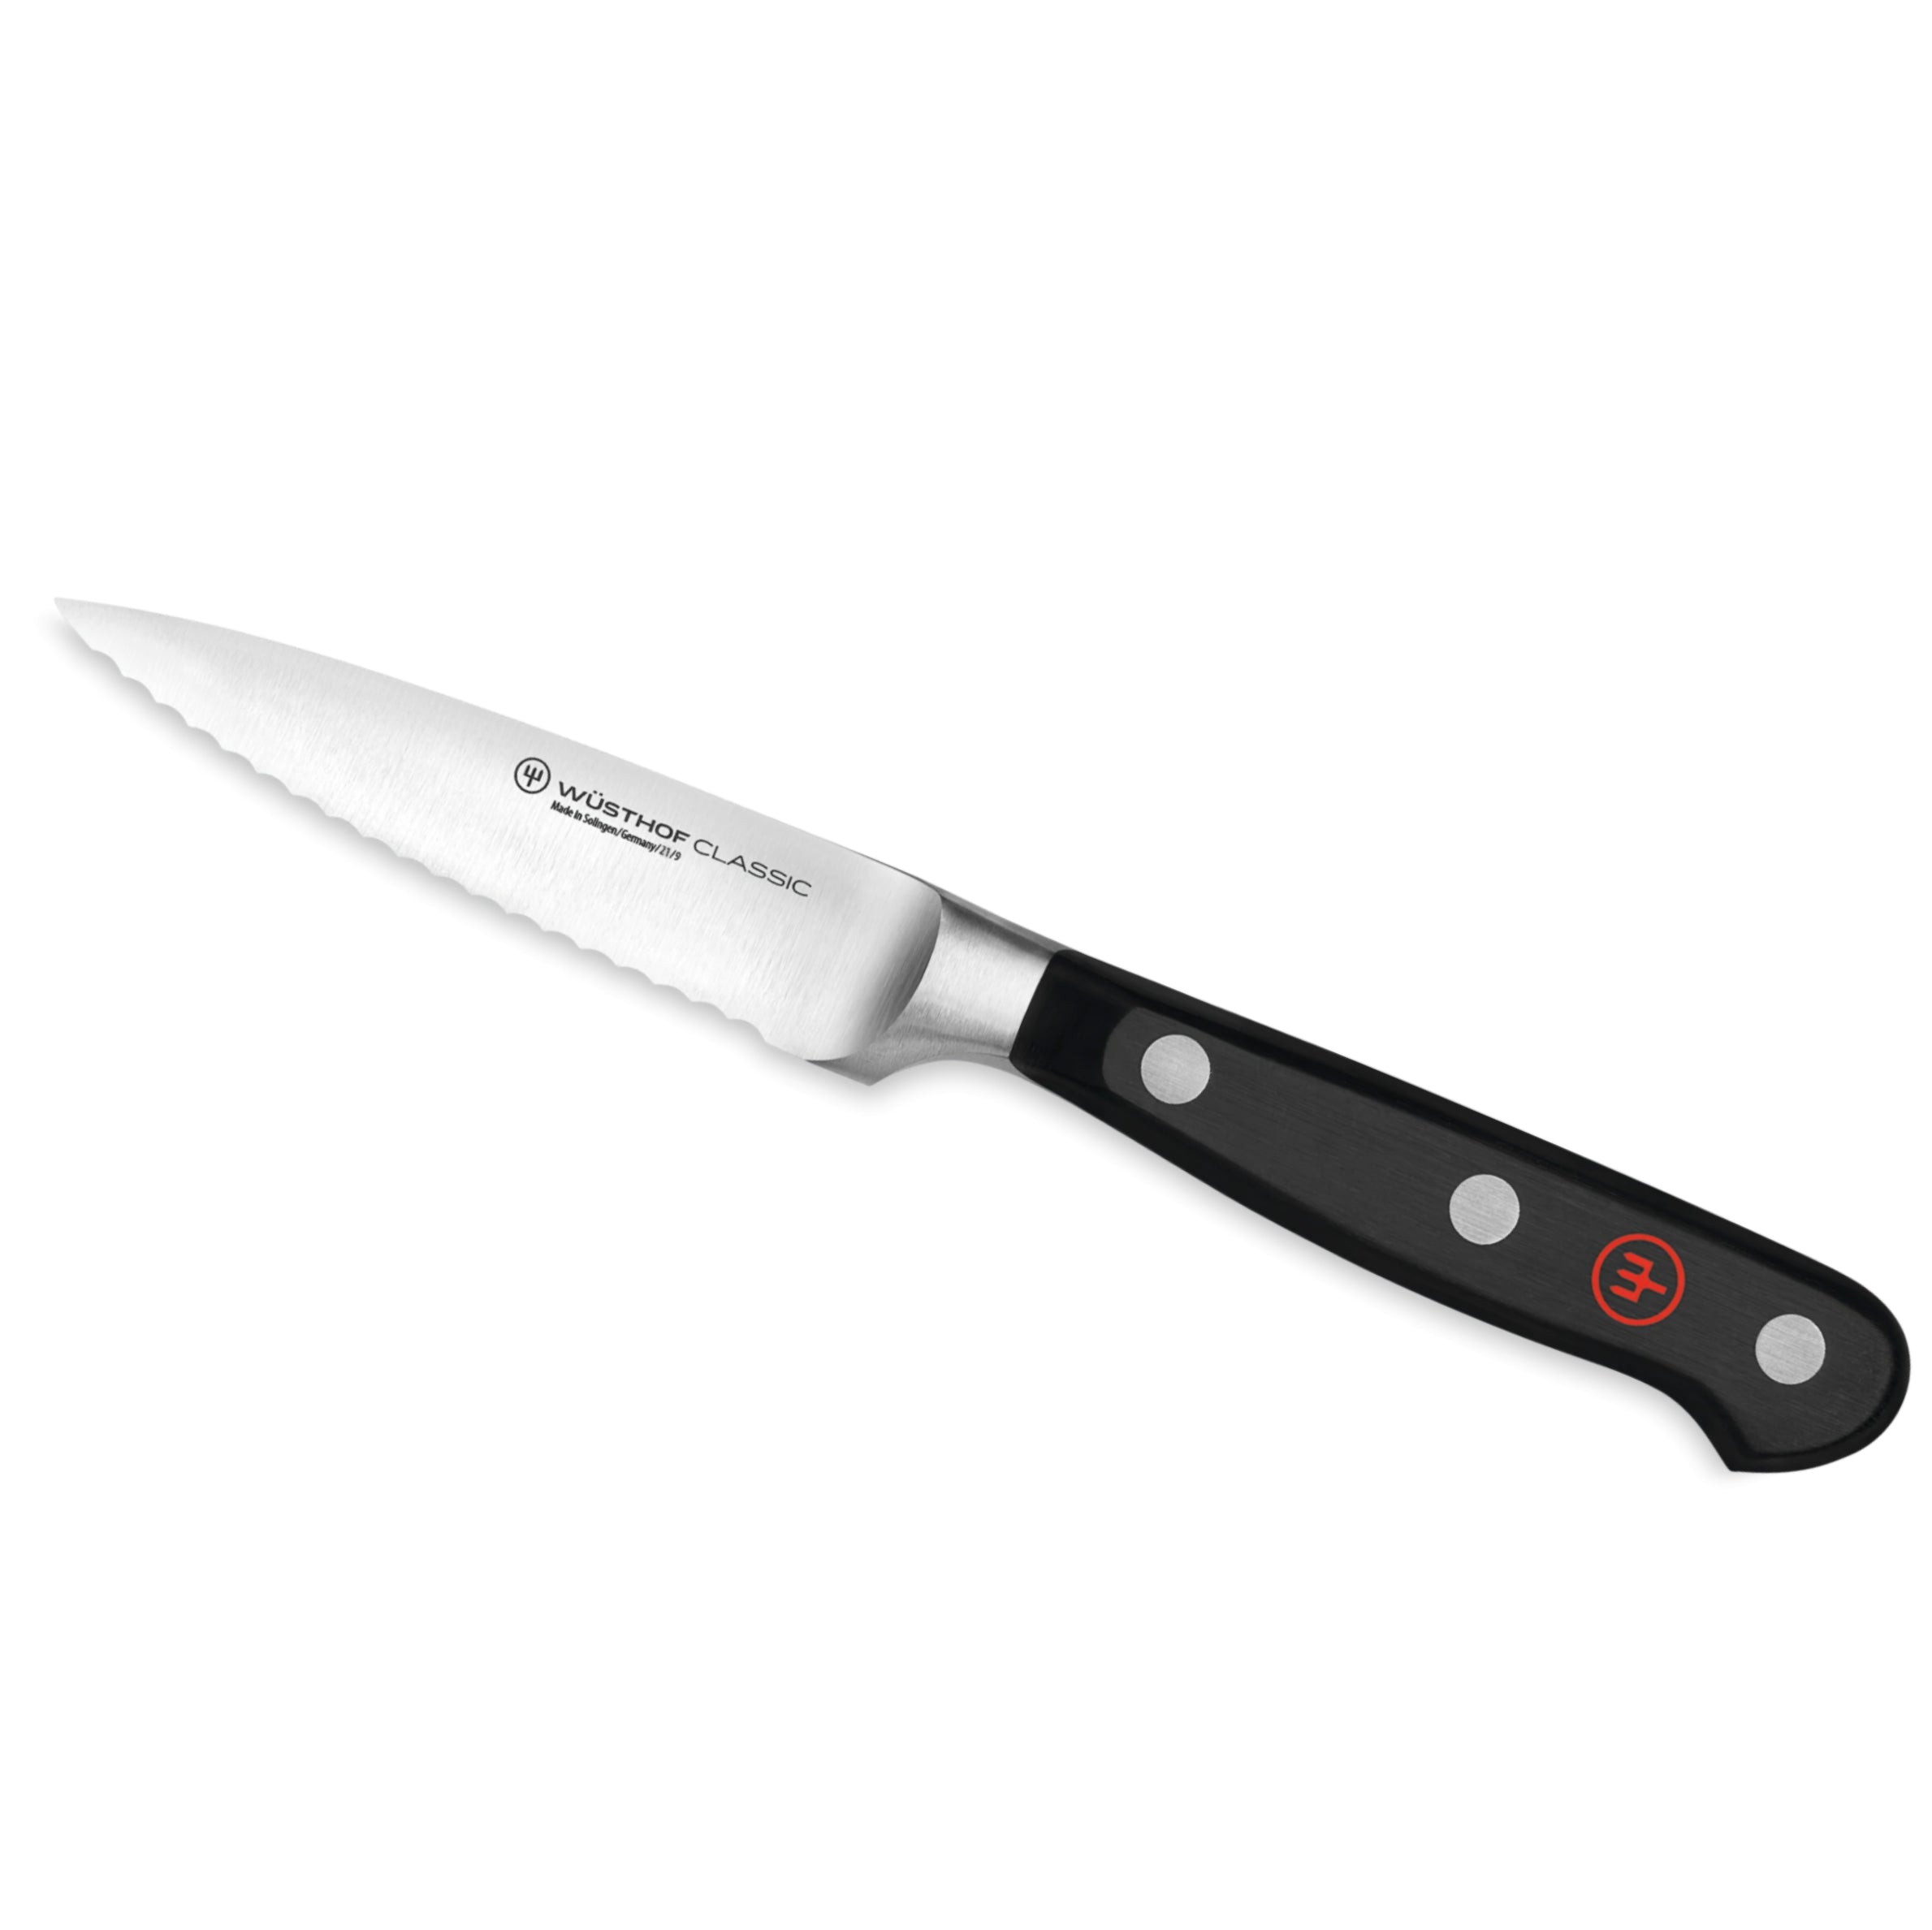 Wüsthof Classic 3.5 Serrated Paring Knife